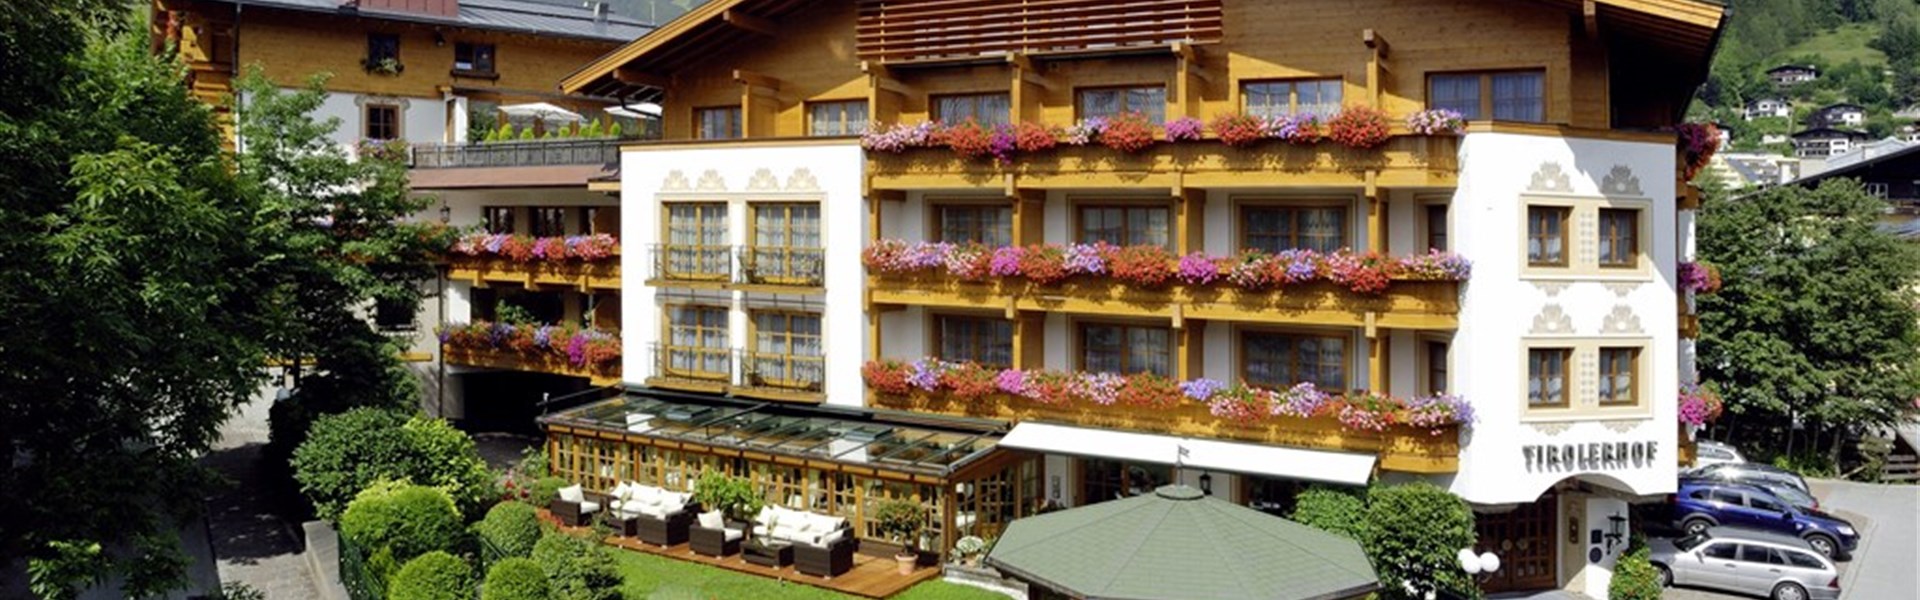 Marco Polo - Hotel Tirolerhof (S) - 